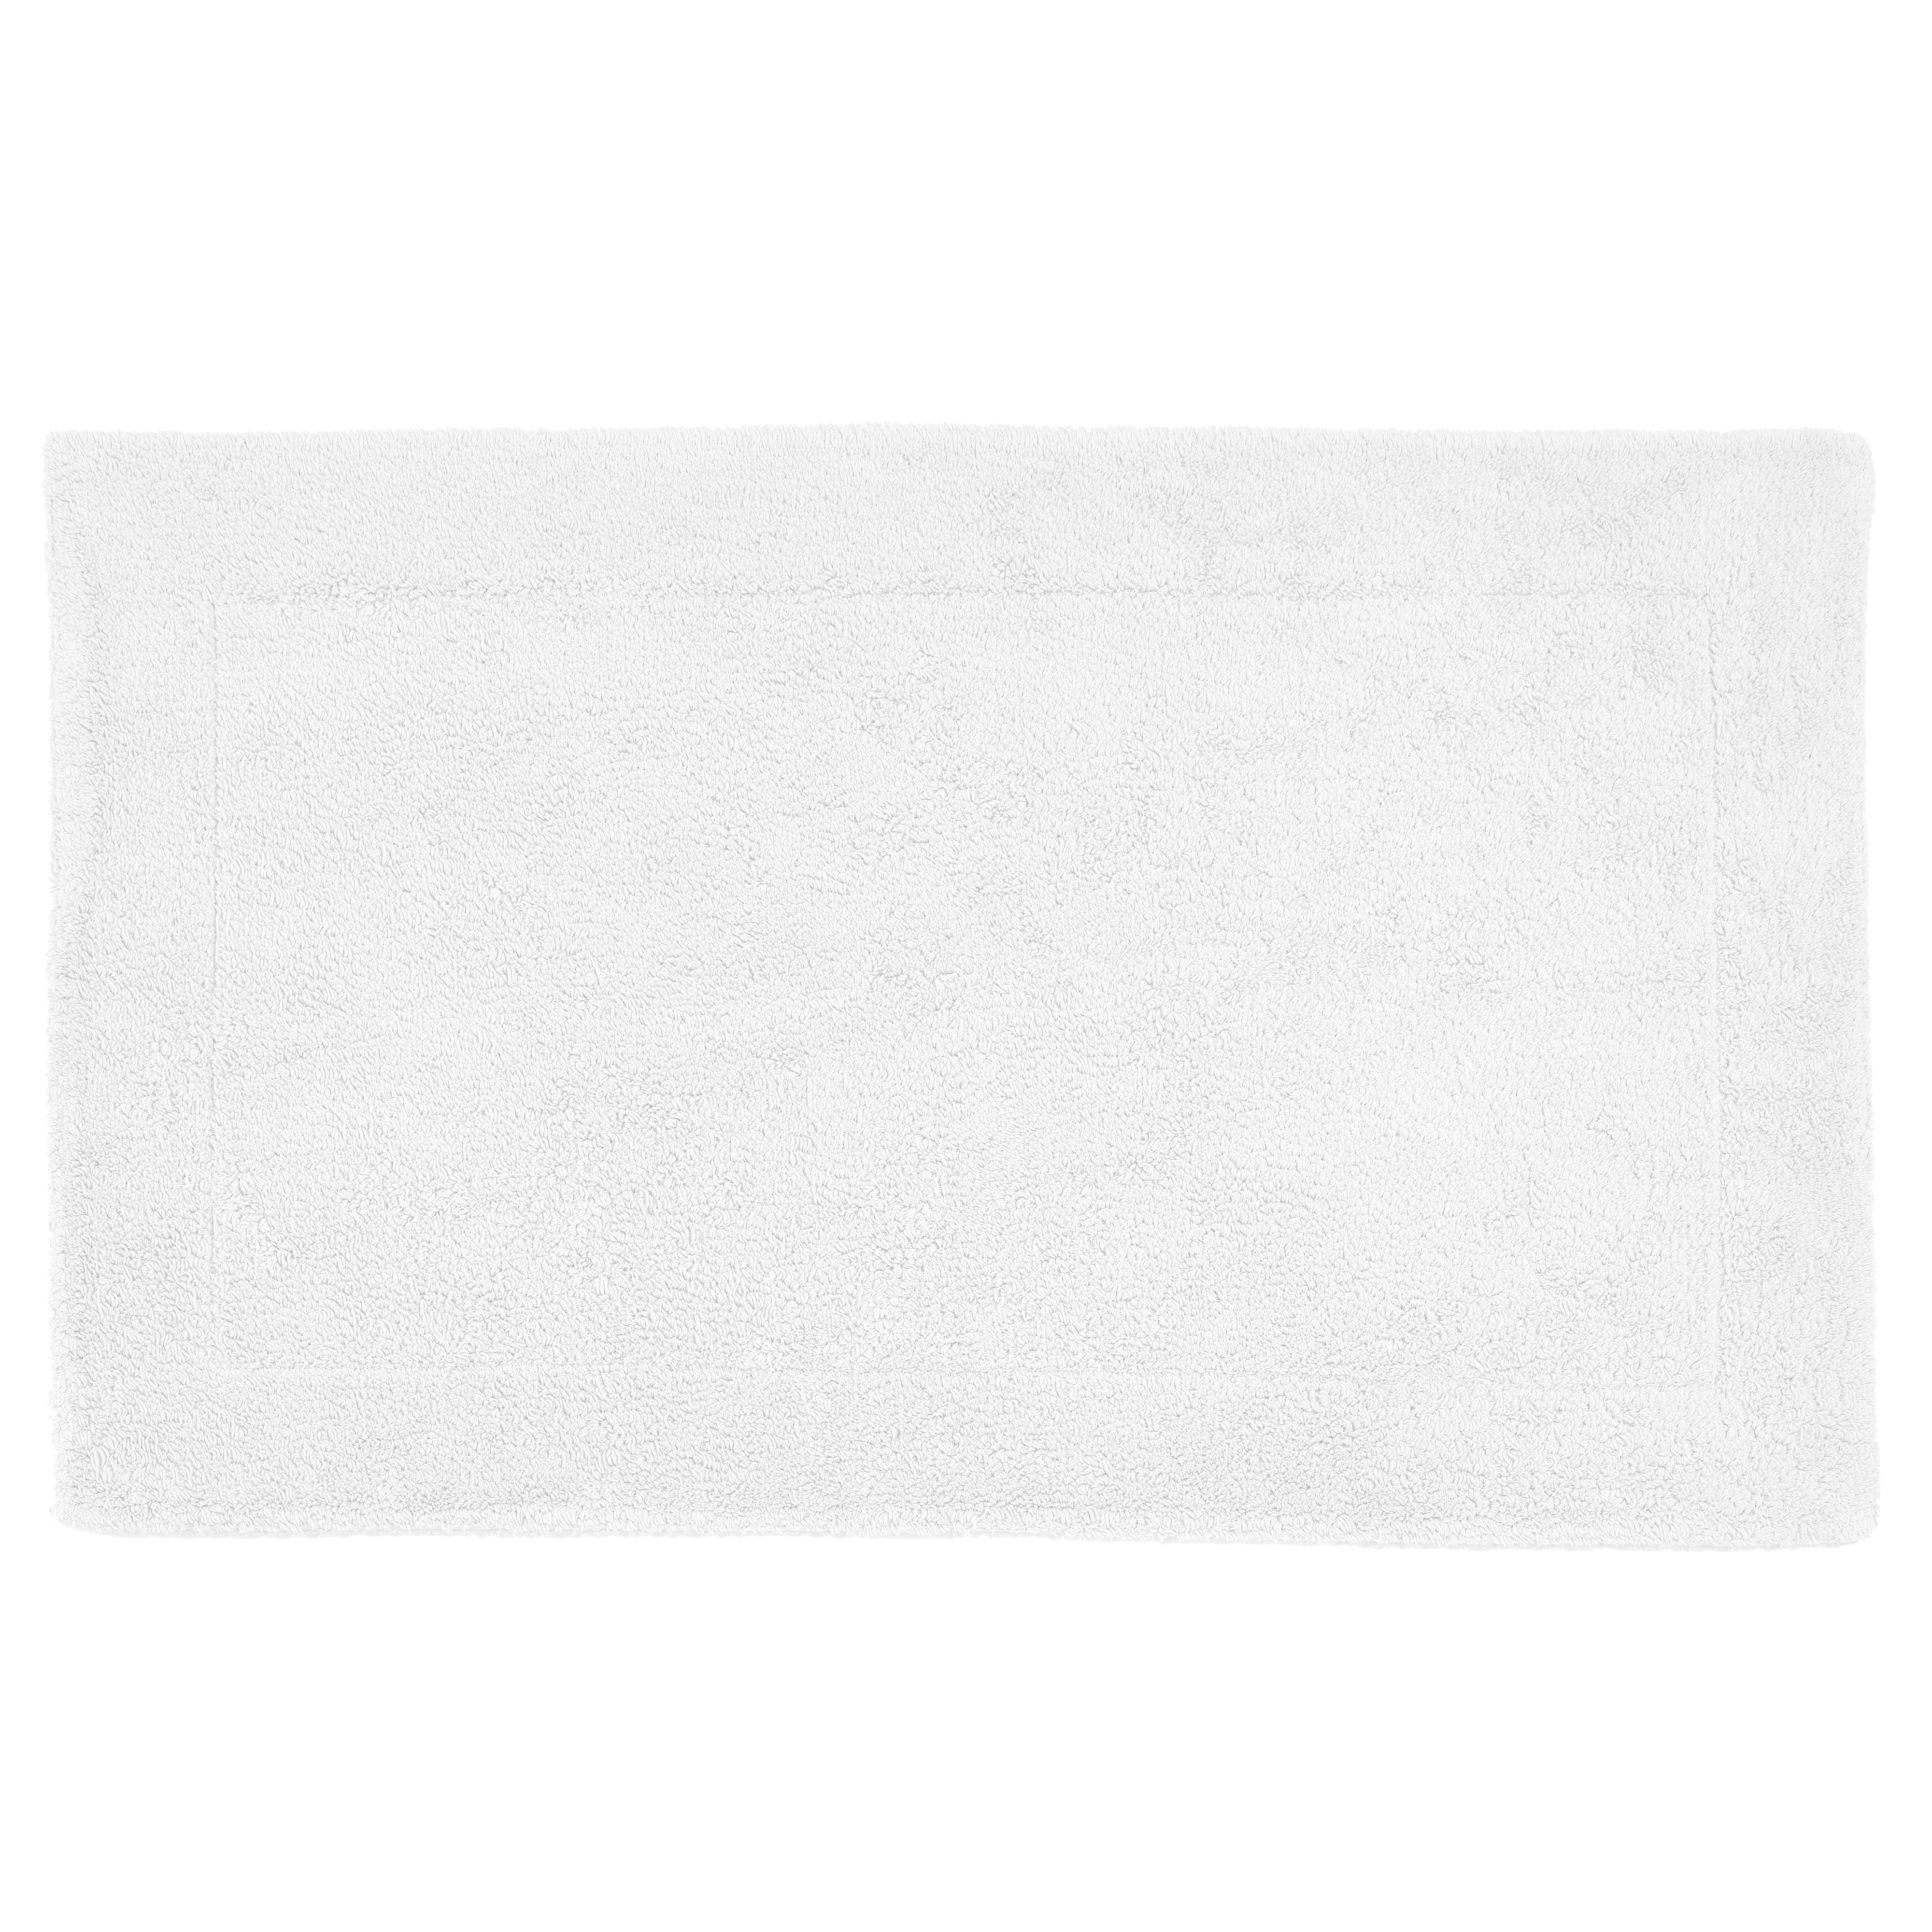 Duck Brand Extra-Soft Extra Long Bathtub Mat, White, 17 x 40